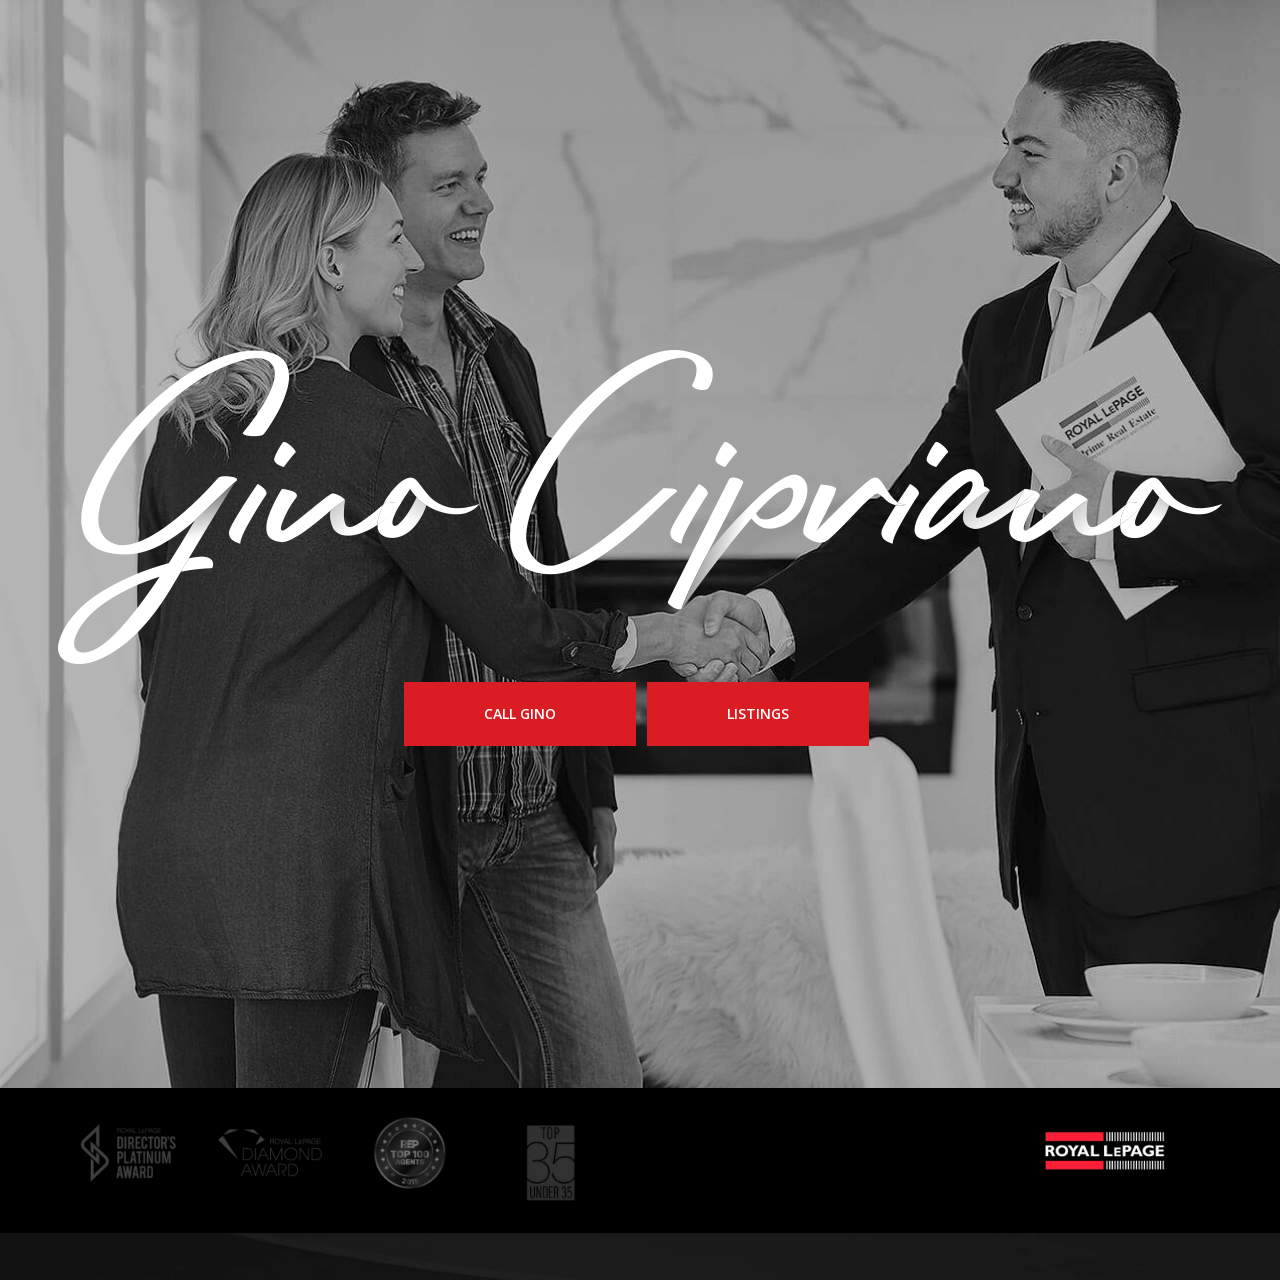 Gino Cipriano website designed by 6P Marketing